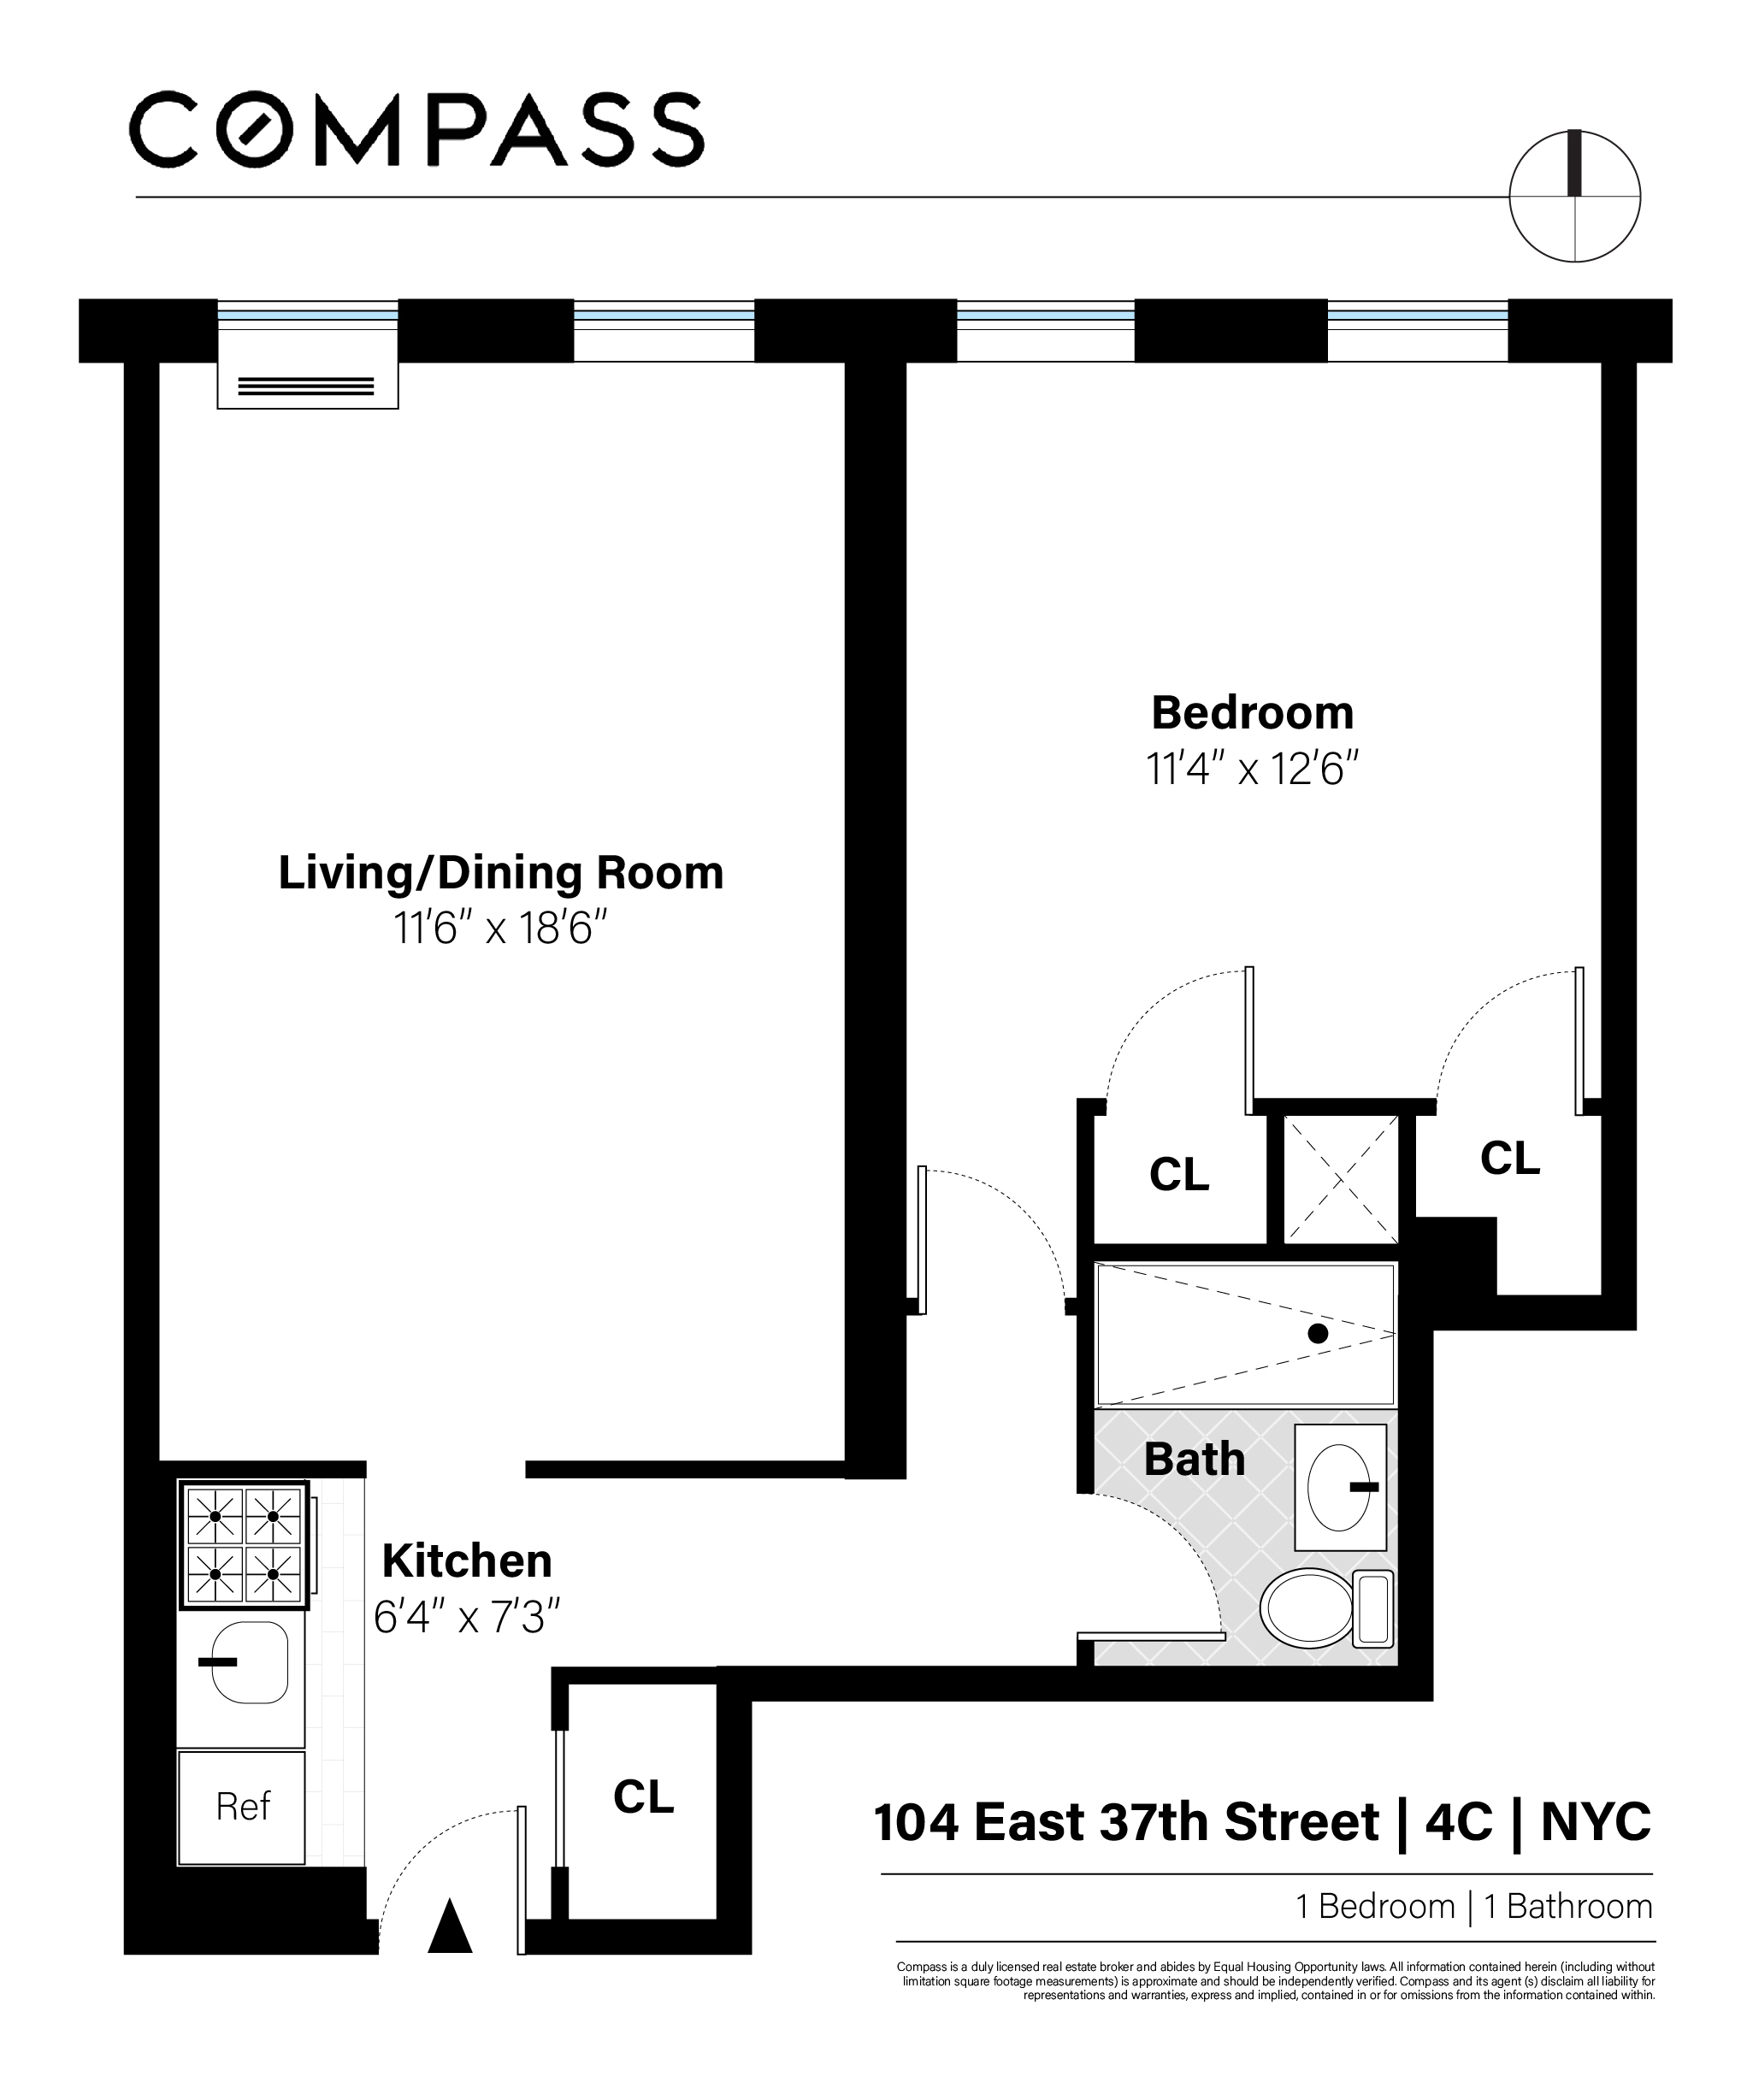 Floorplan for 104 East 37th Street, 4C